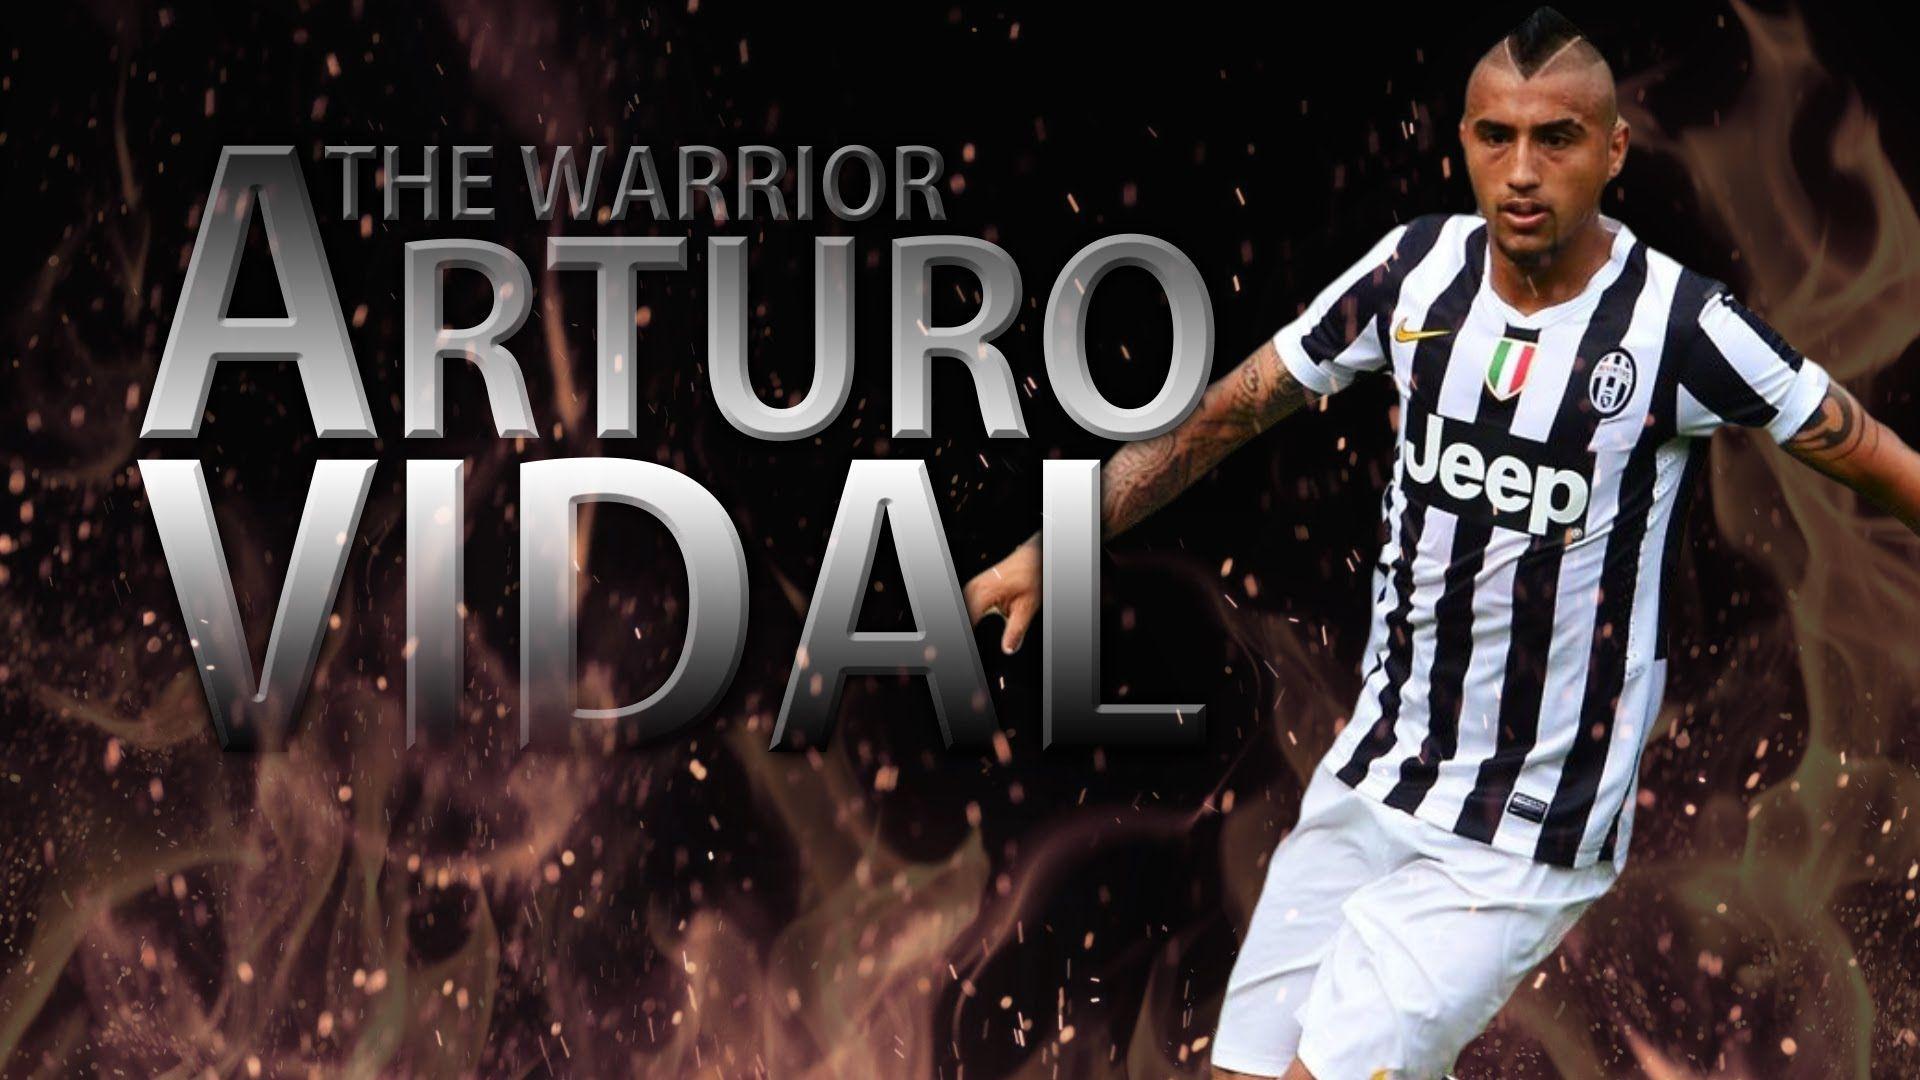 Arturo Vidal Warrior (HD 2013 14)